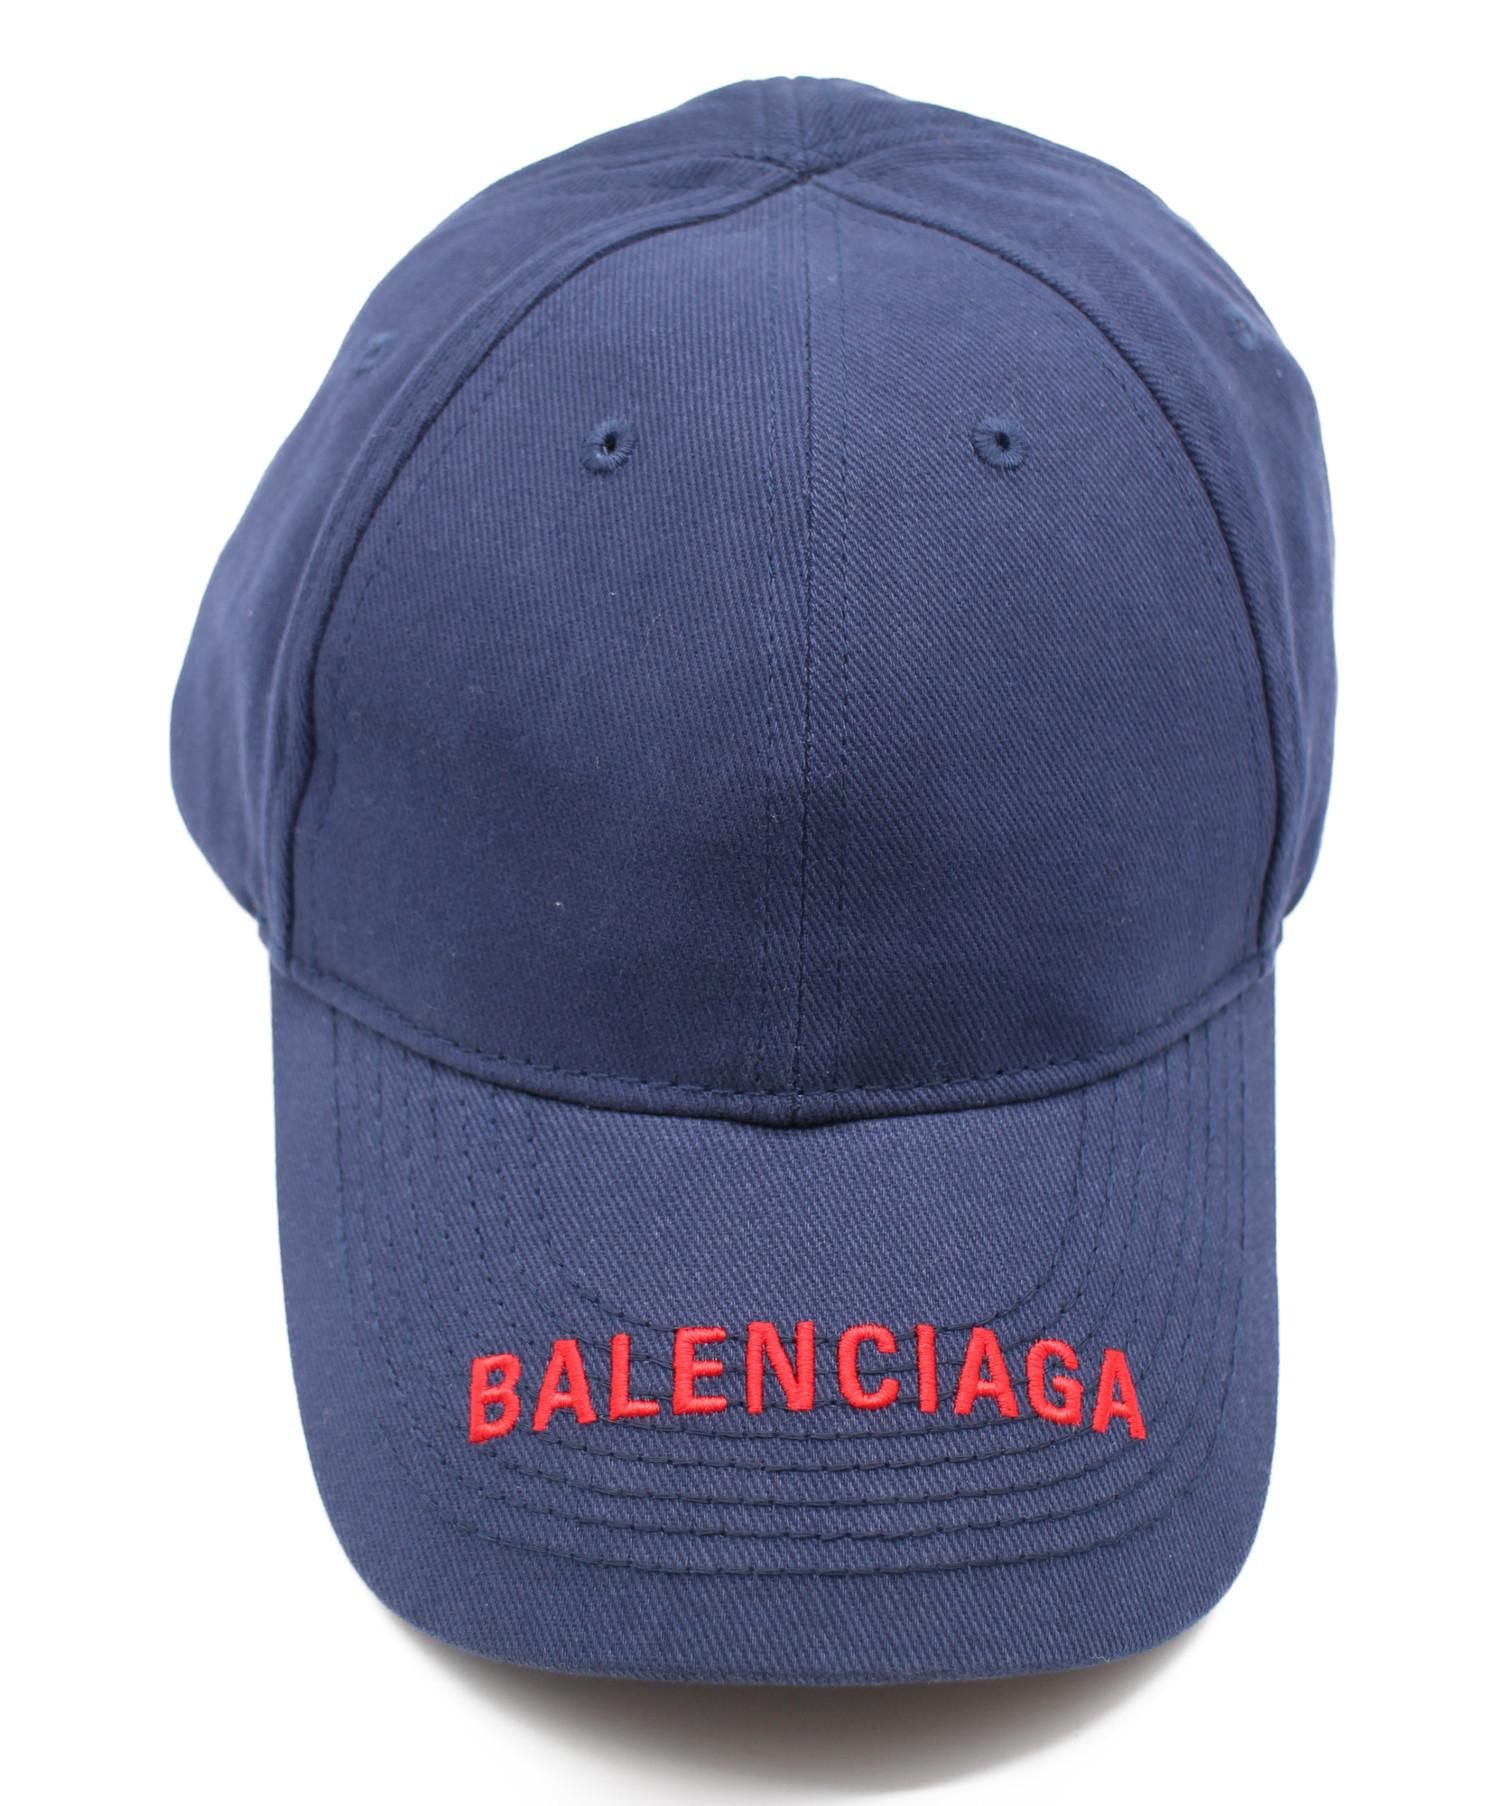 BALENCIAGA (バレンシアガ) 19SS/ロゴキャップ ネイビー サイズ:L/59?